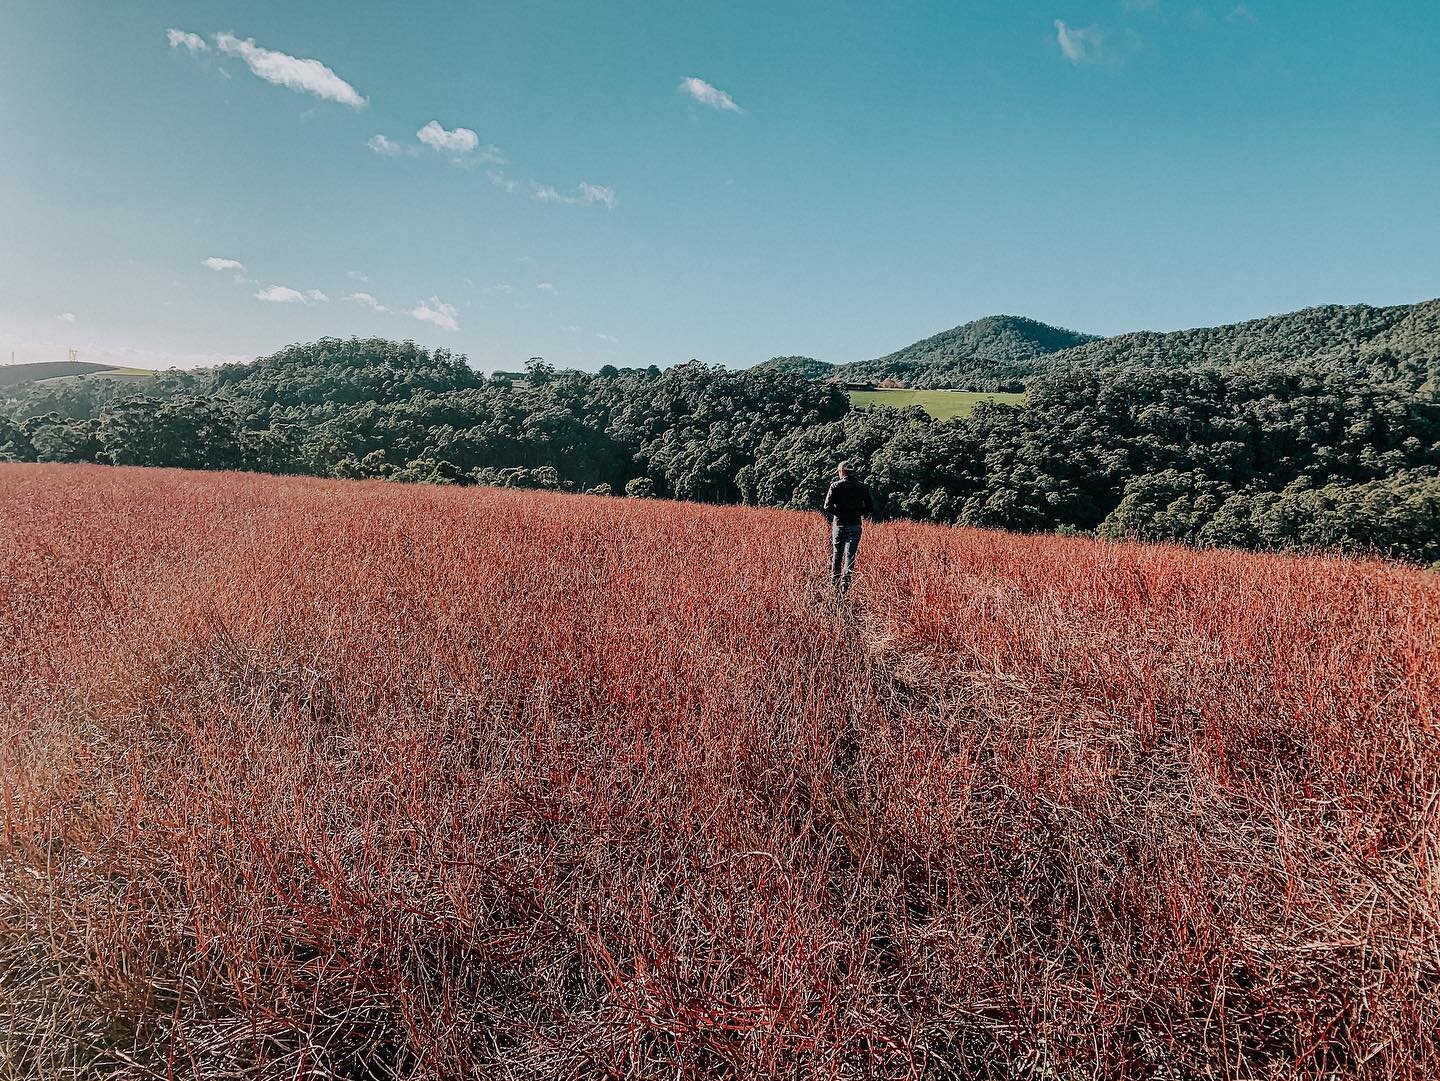 Crop walks in the ruby buckwheat